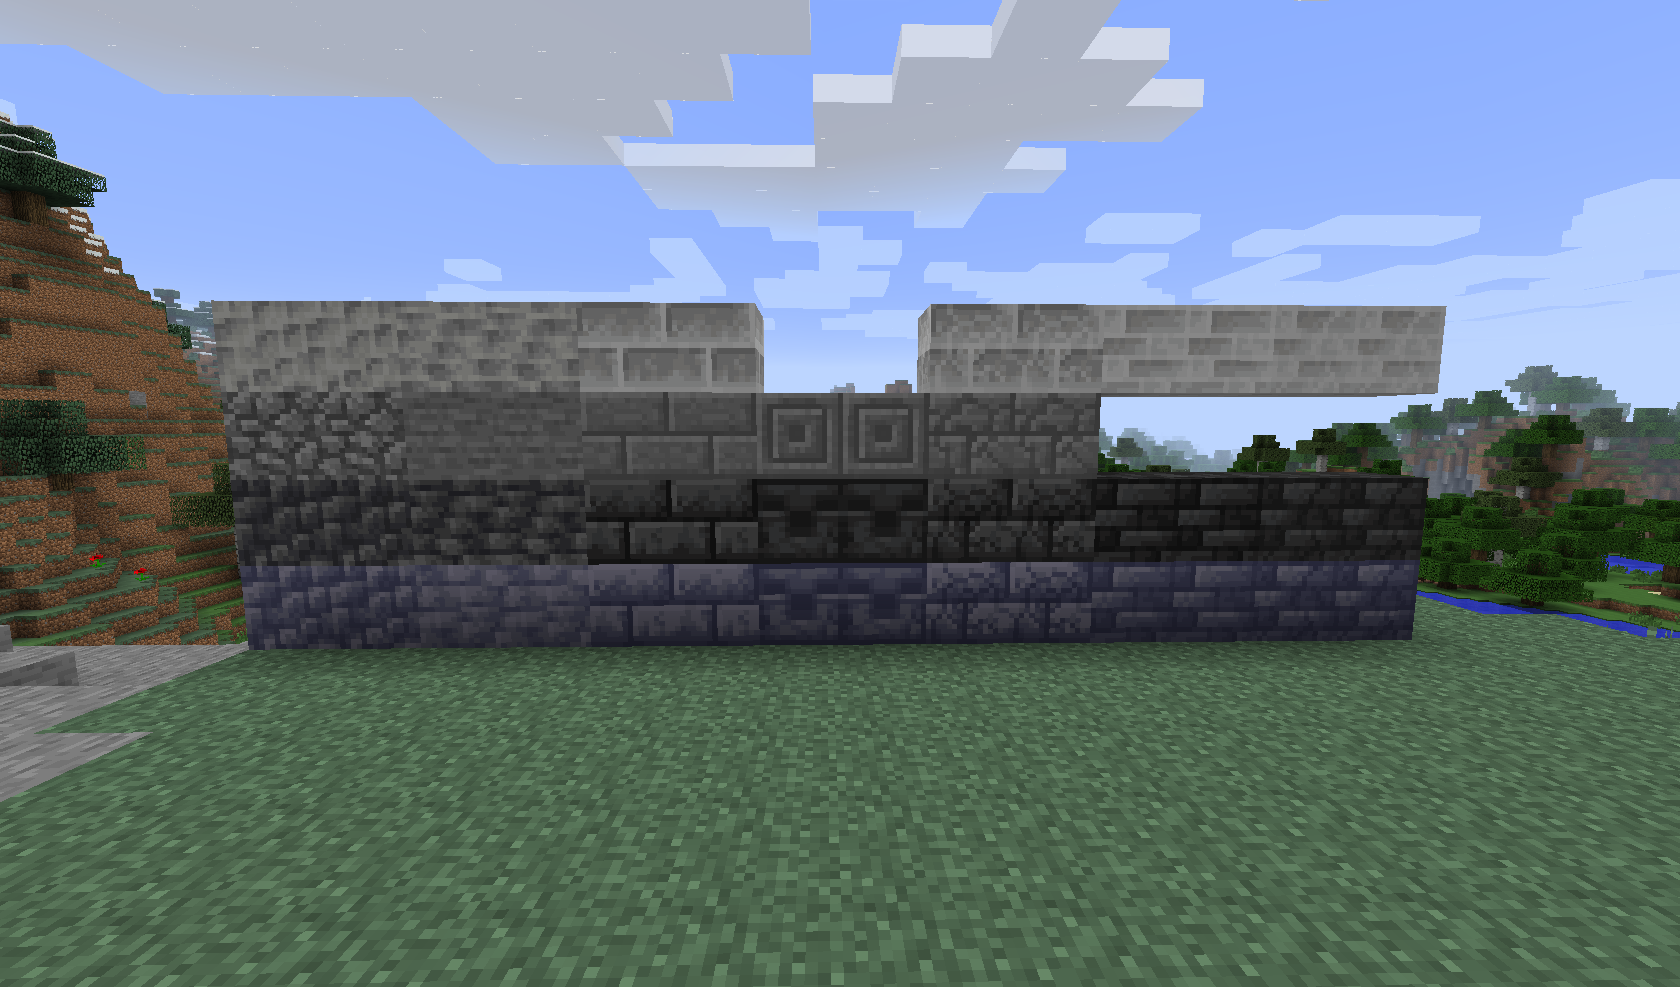 Some Building Blocks